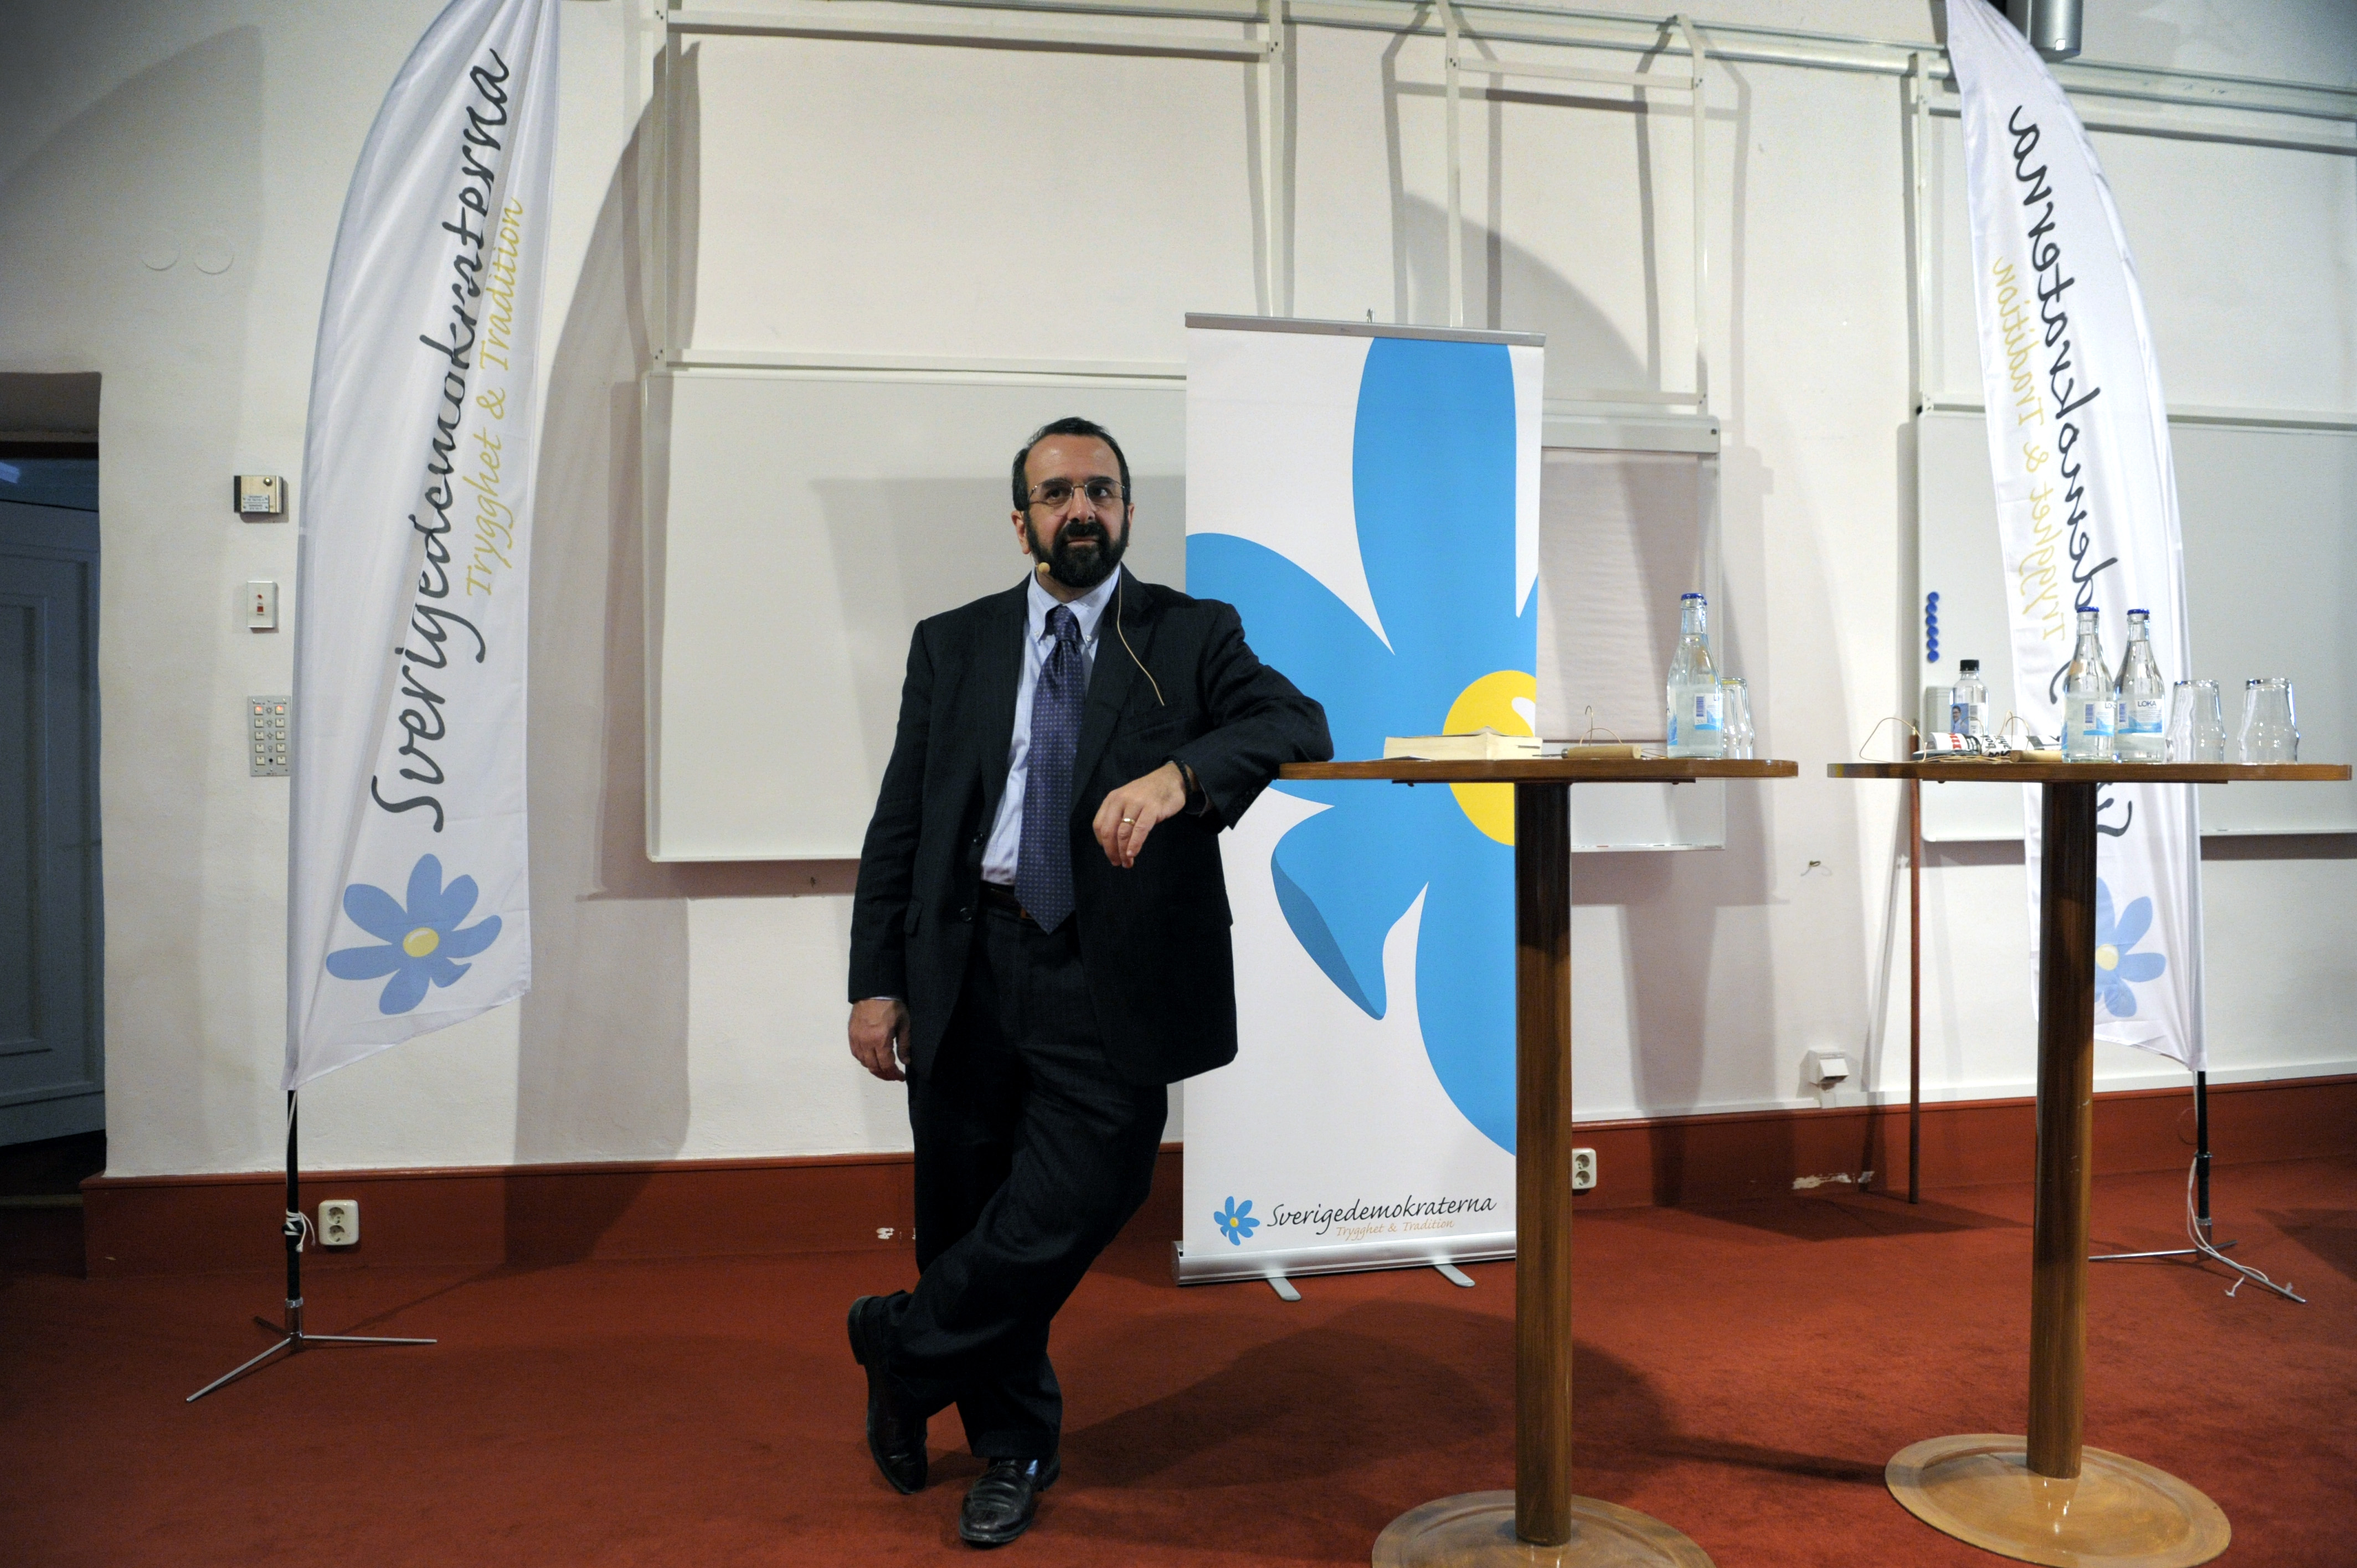 Almedalen, Islam, Riksdagsvalet 2010, Robert Spencer, Sverigedemokraterna